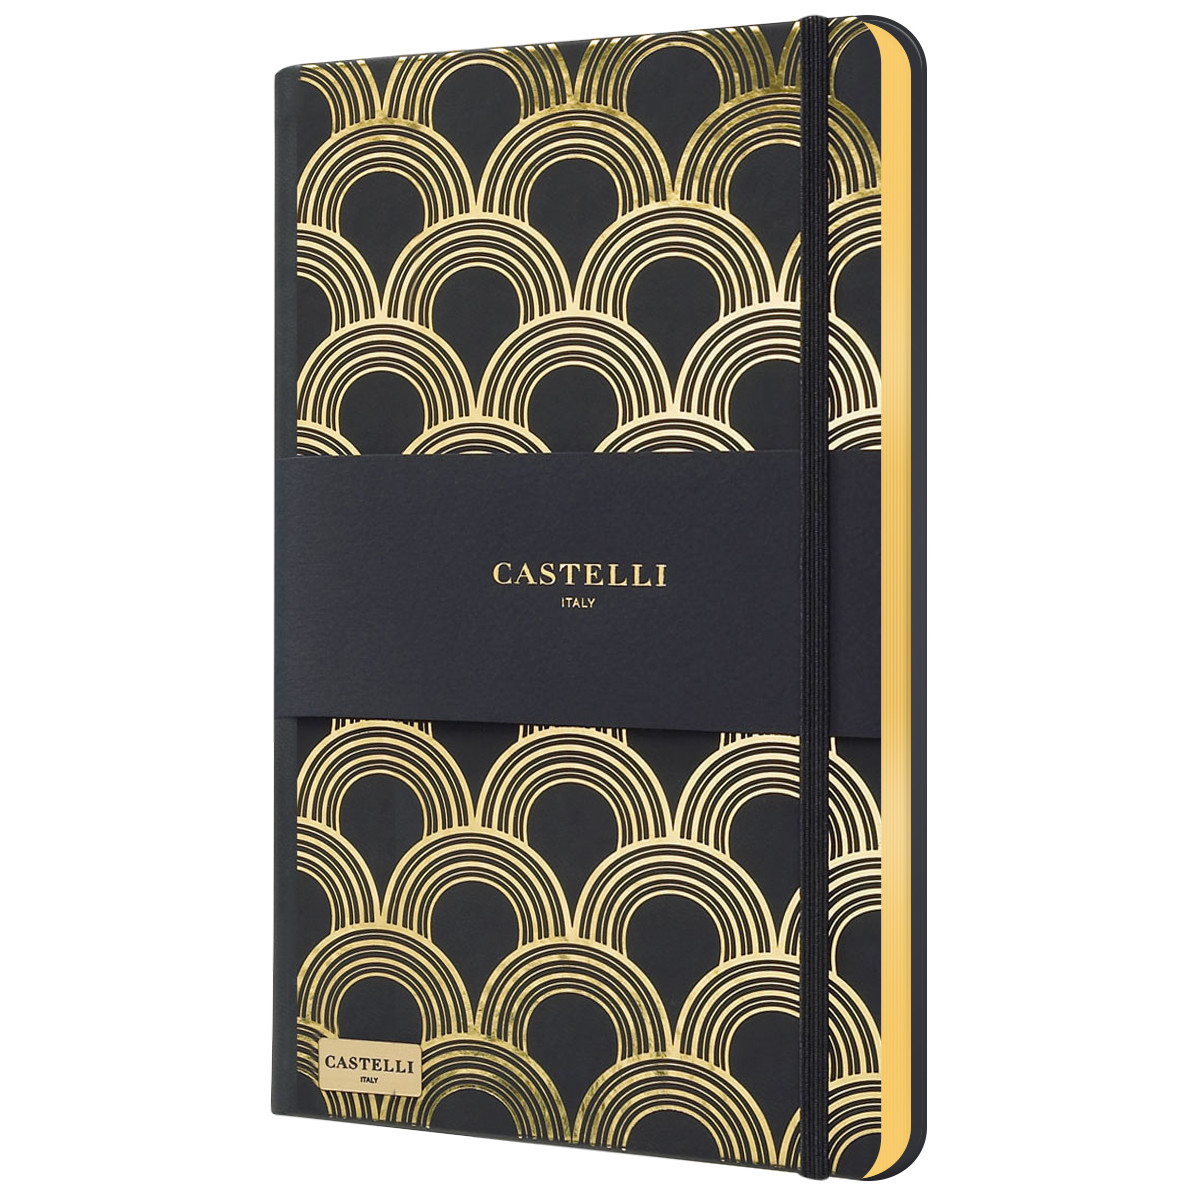 Castelli Hardback Medium Notebook - Ruled - Art Deco Gold